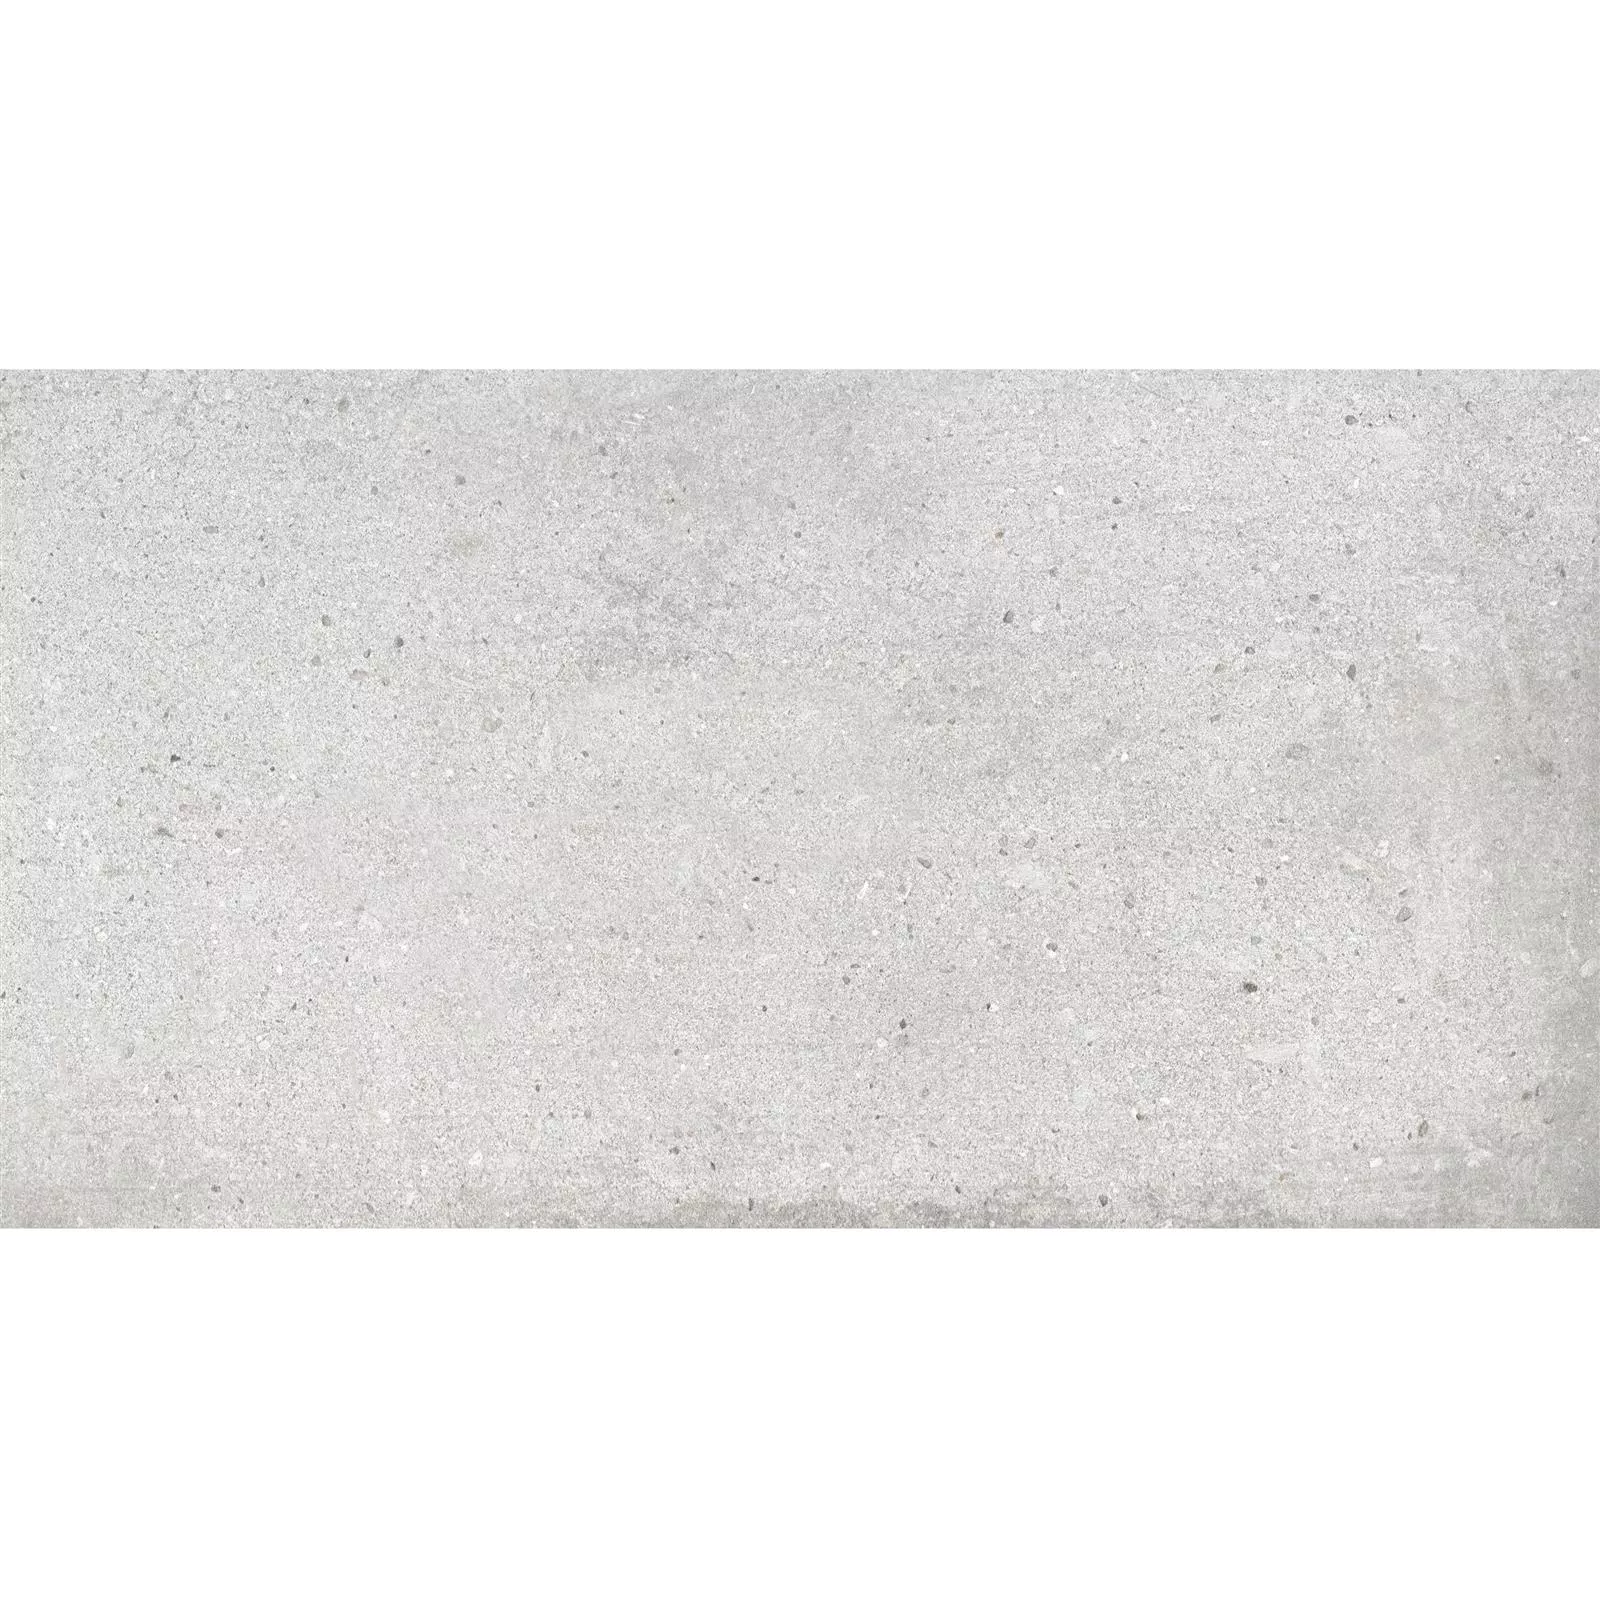 Ladrilhos Freeland Olhar de Pedra R10/B Cinza Claro 30x60cm